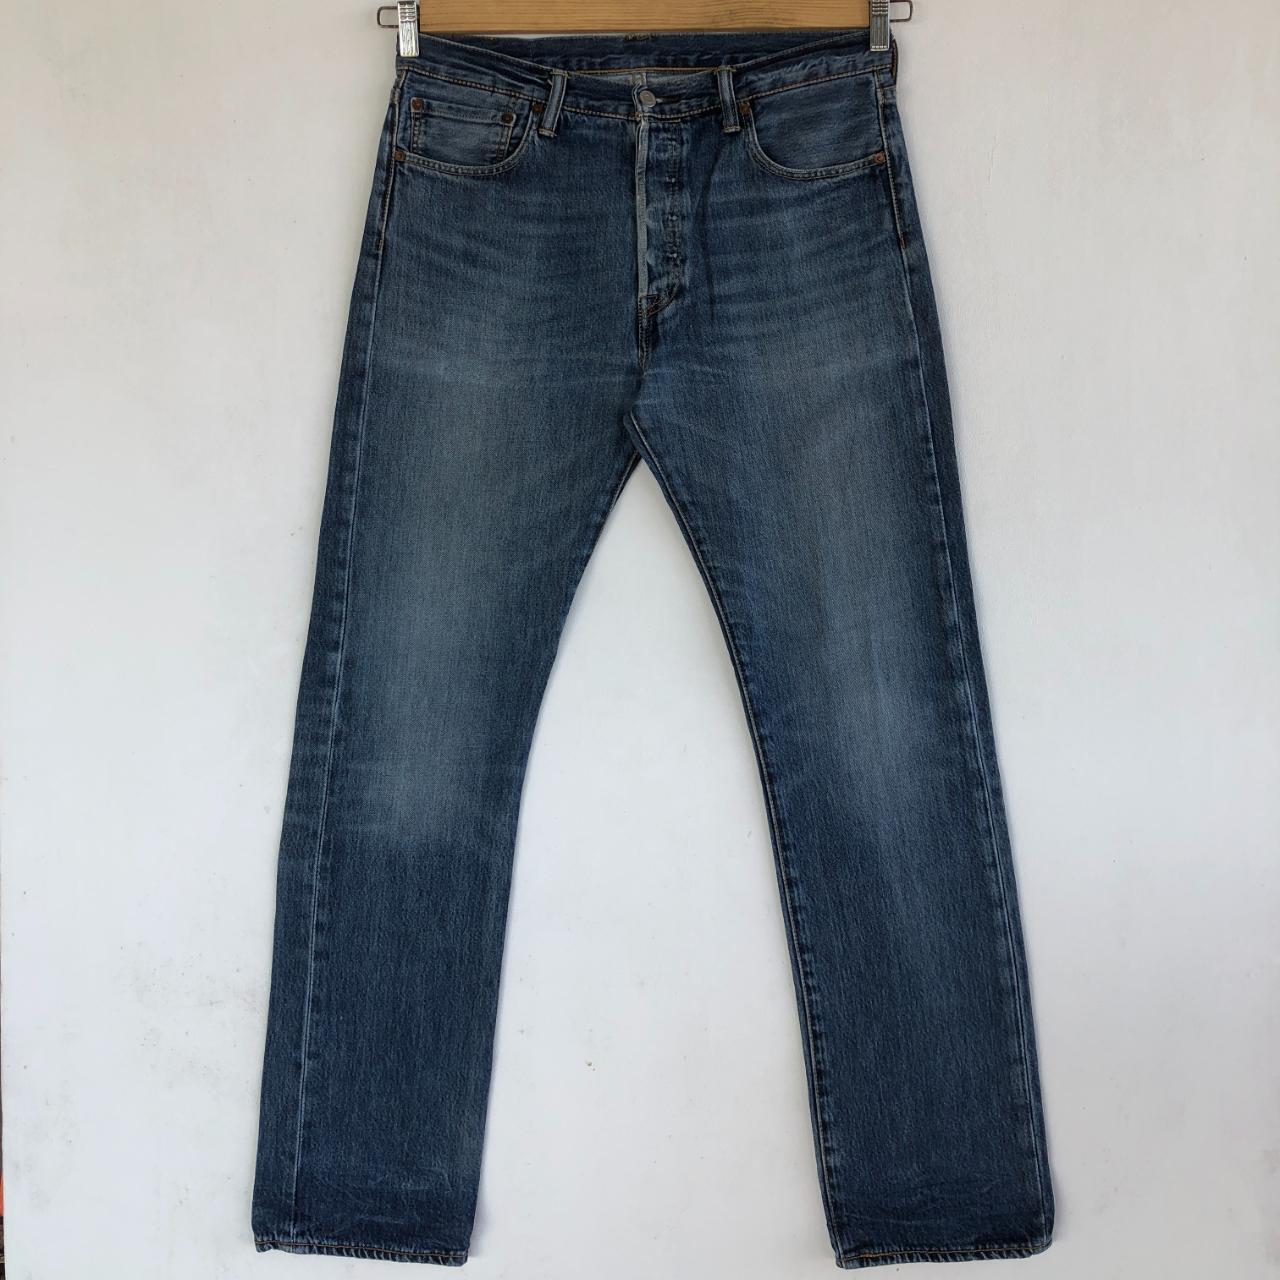 Vintage Levi's 501 Jeans Levis 501 Faded Blue Denim... - Depop